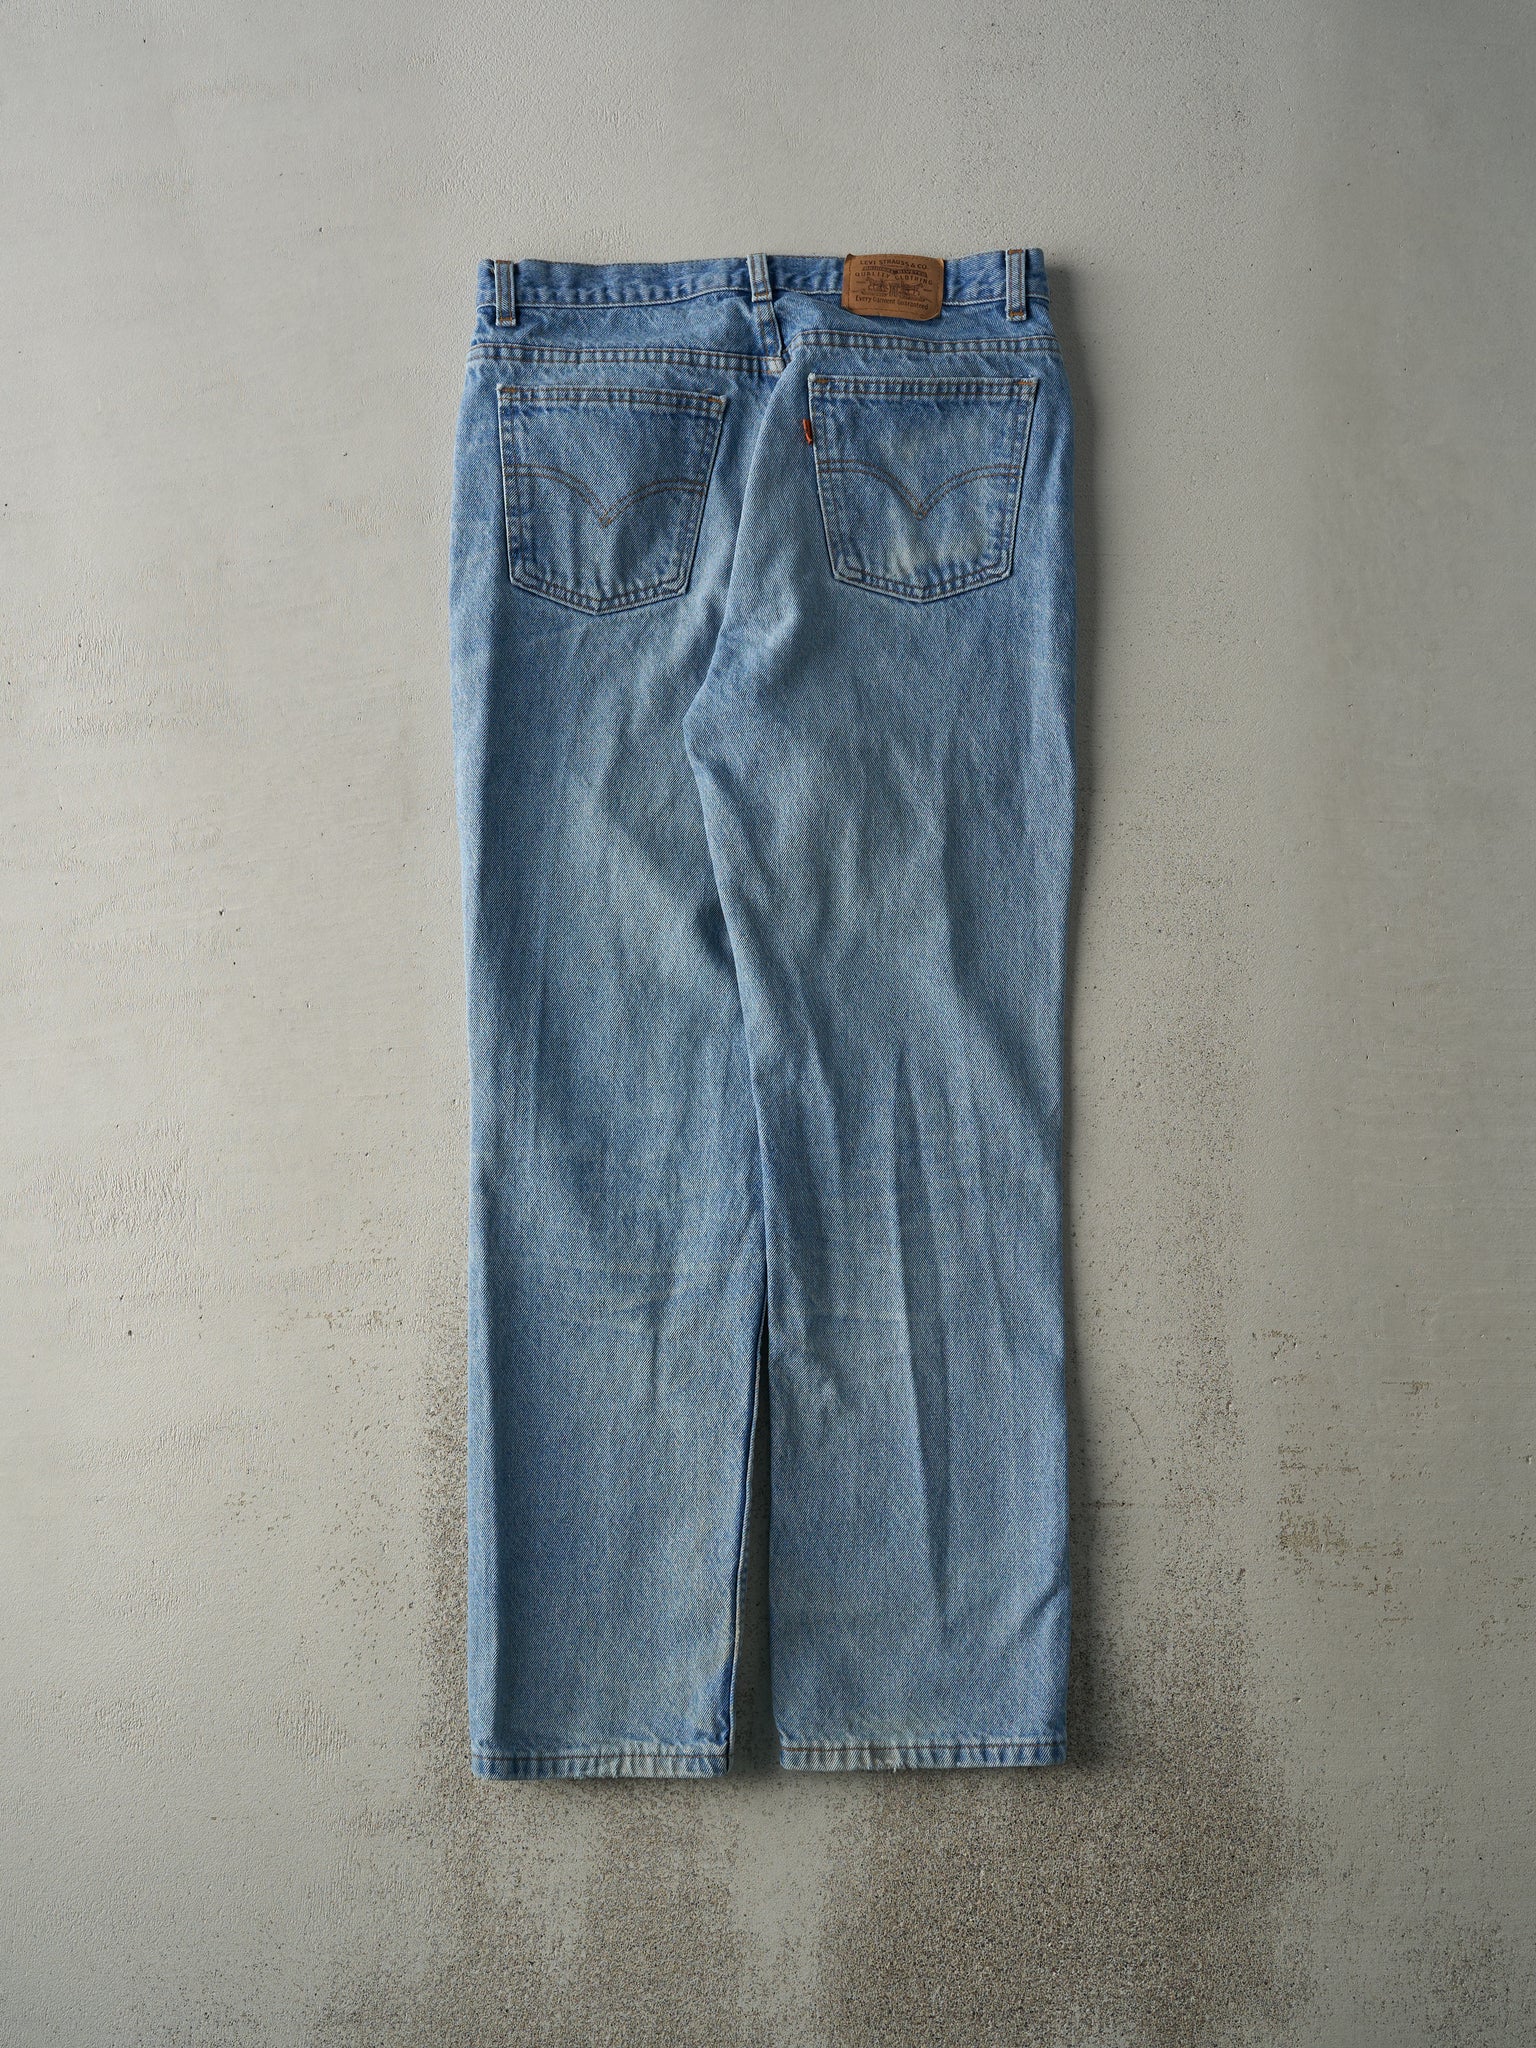 Vintage 80s Light Wash Levi's Orange Tab Jeans (32x31.5)